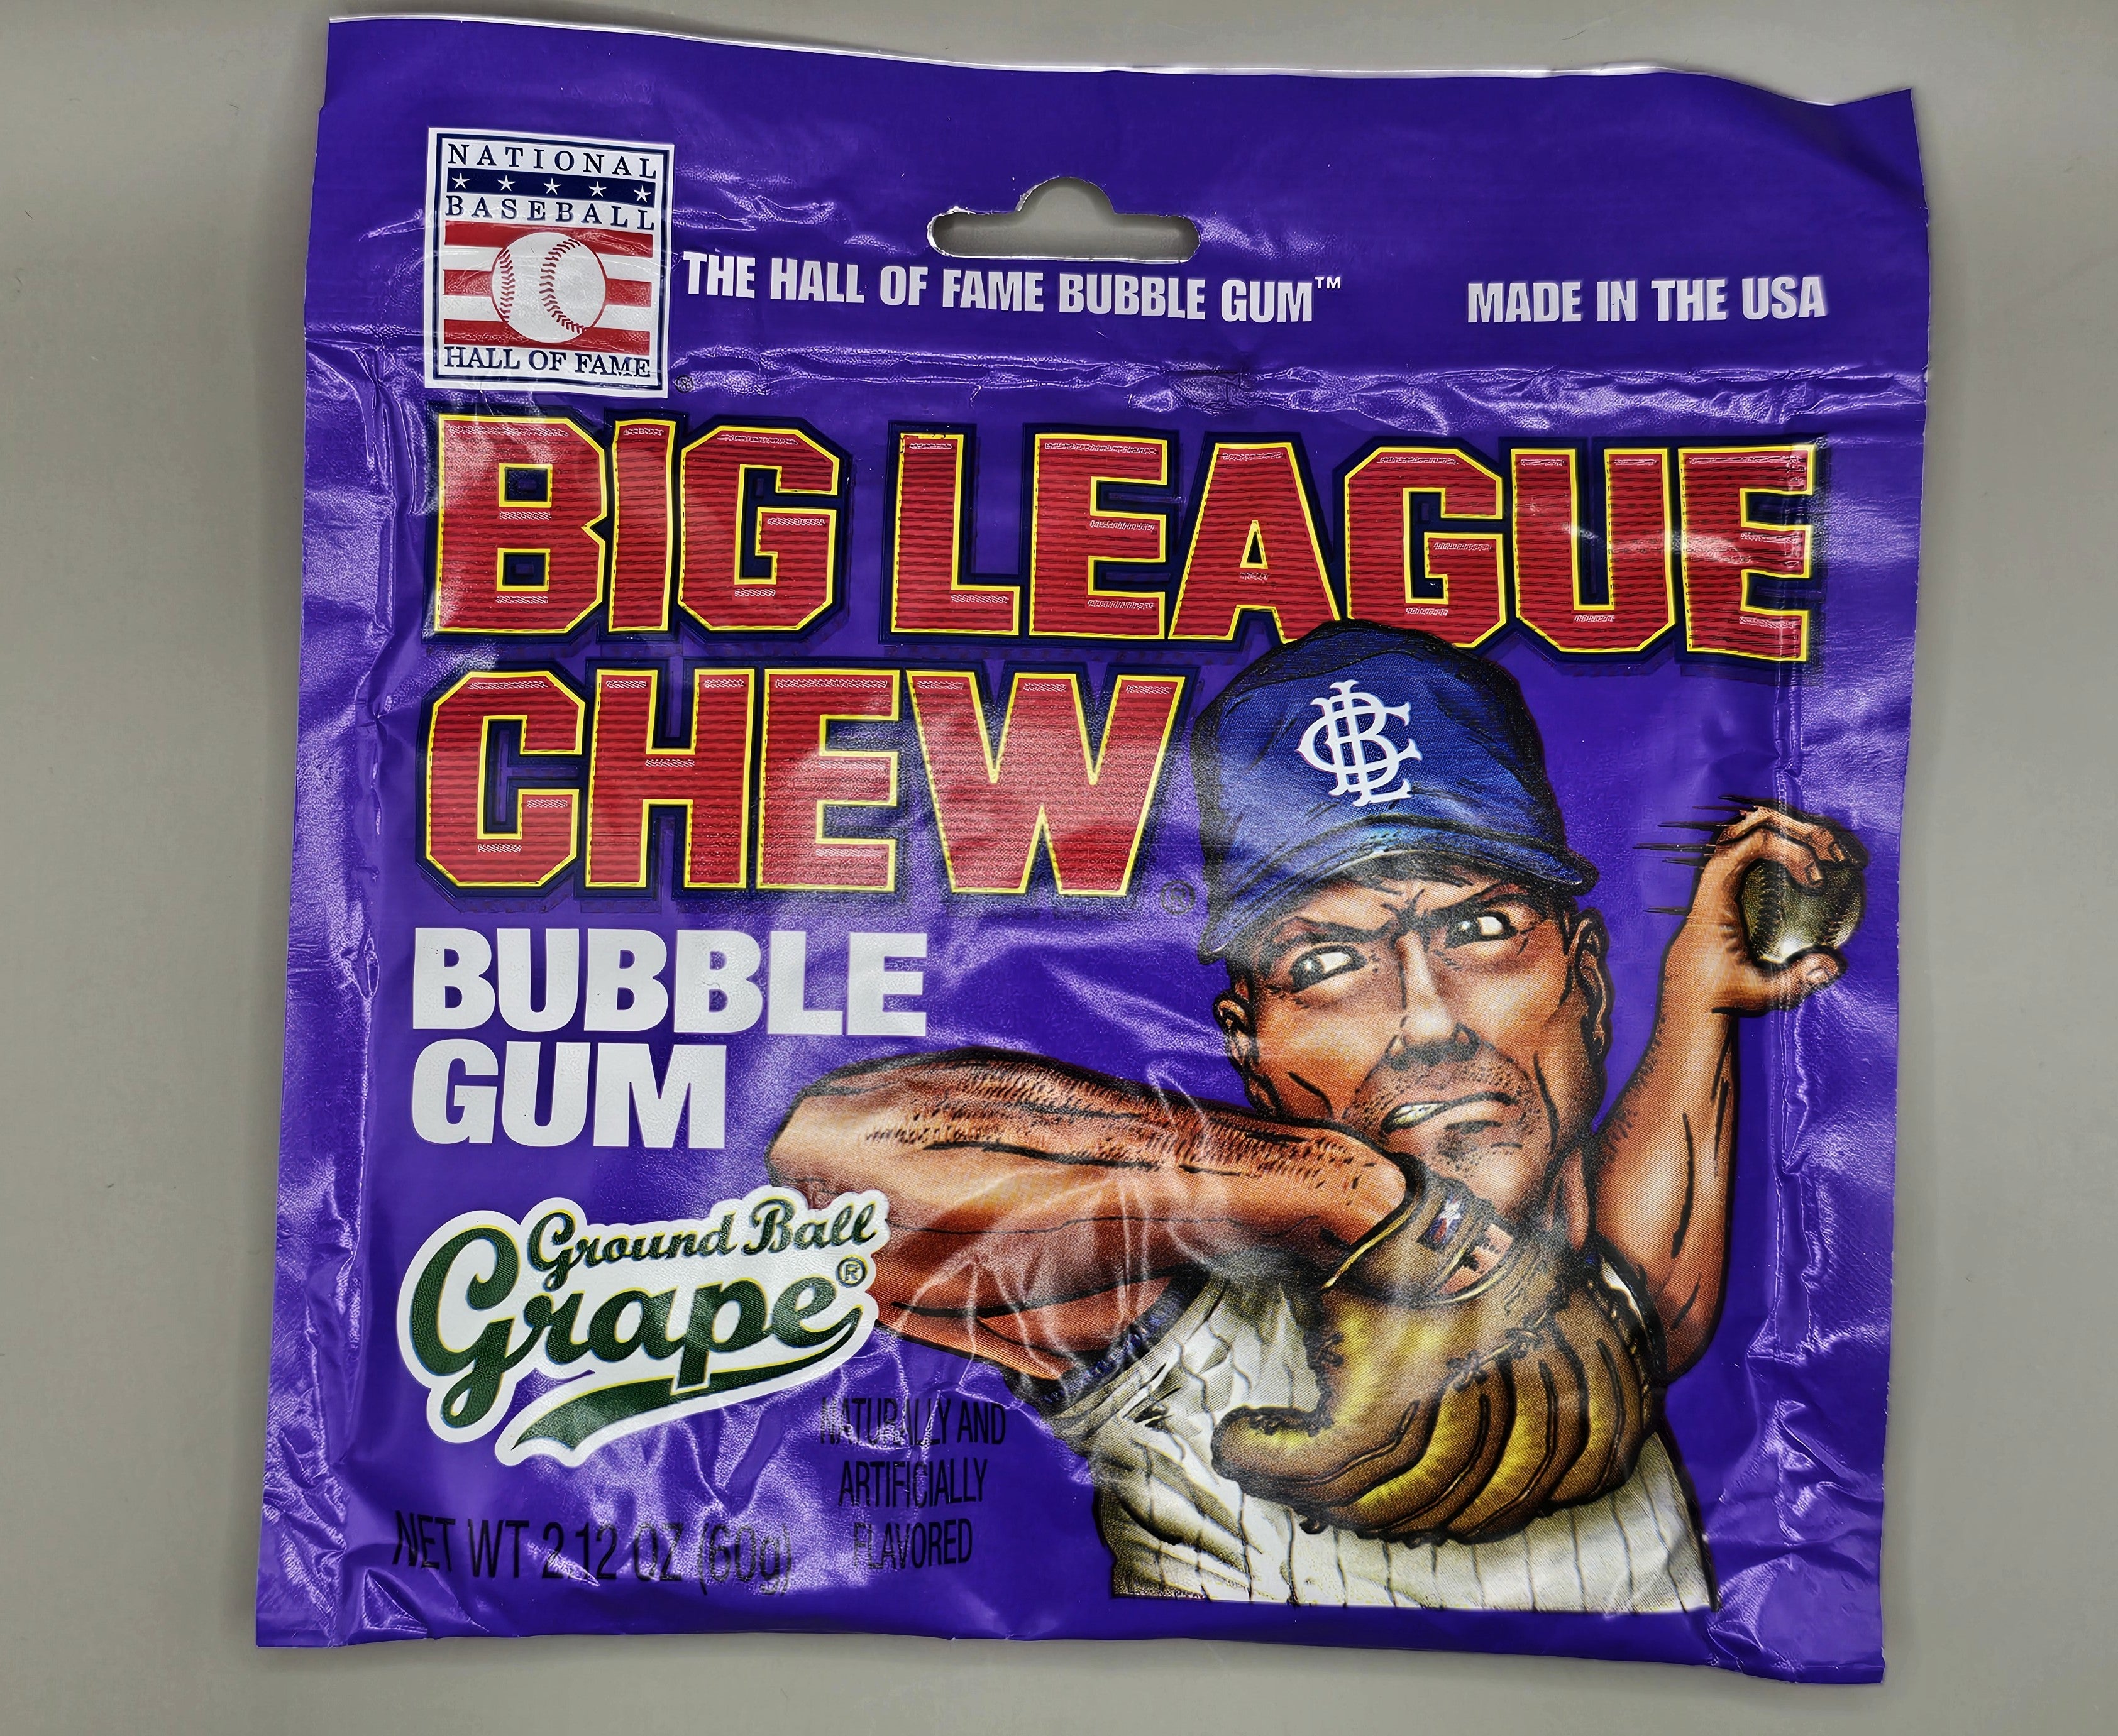 Ground ball grape big league chew.